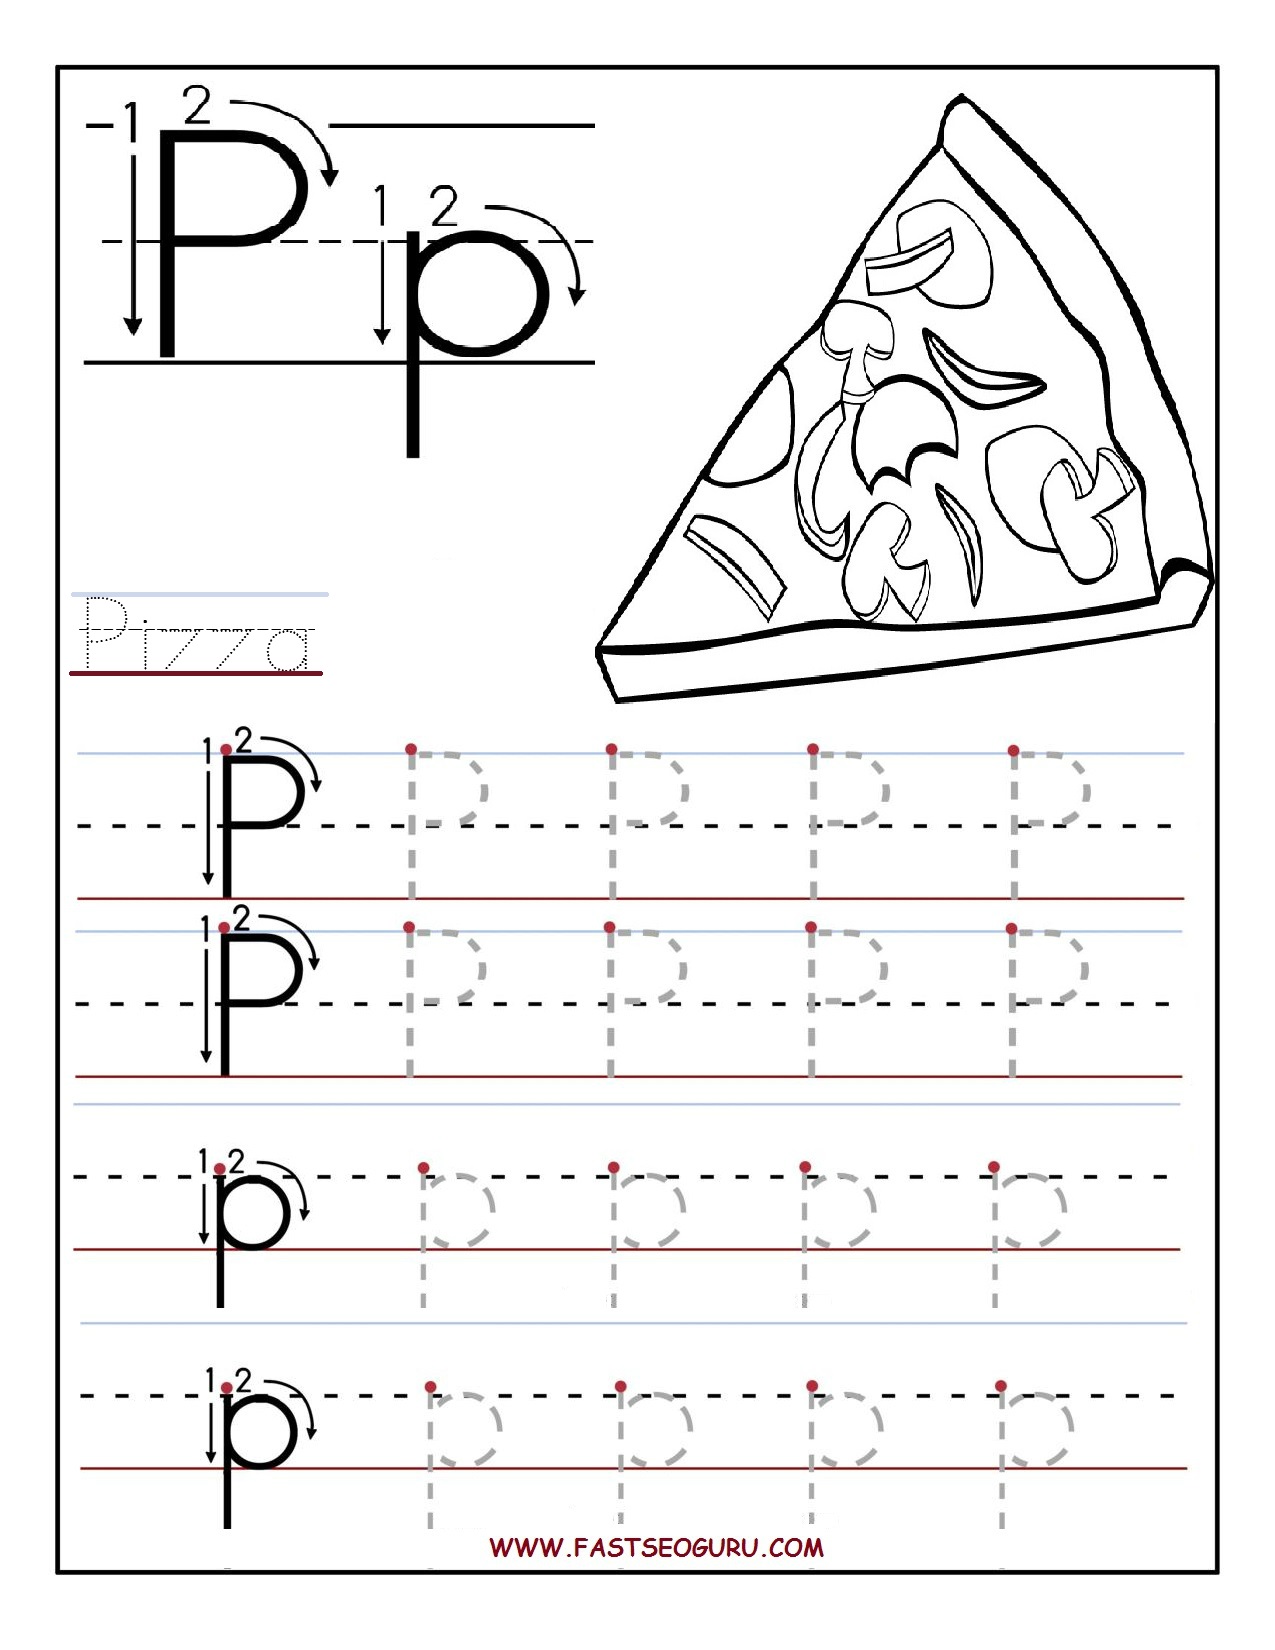 Printable Letter P Tracing Worksheets For Preschool jpg 1 275 1 650 Pixels Tracing Worksheets 